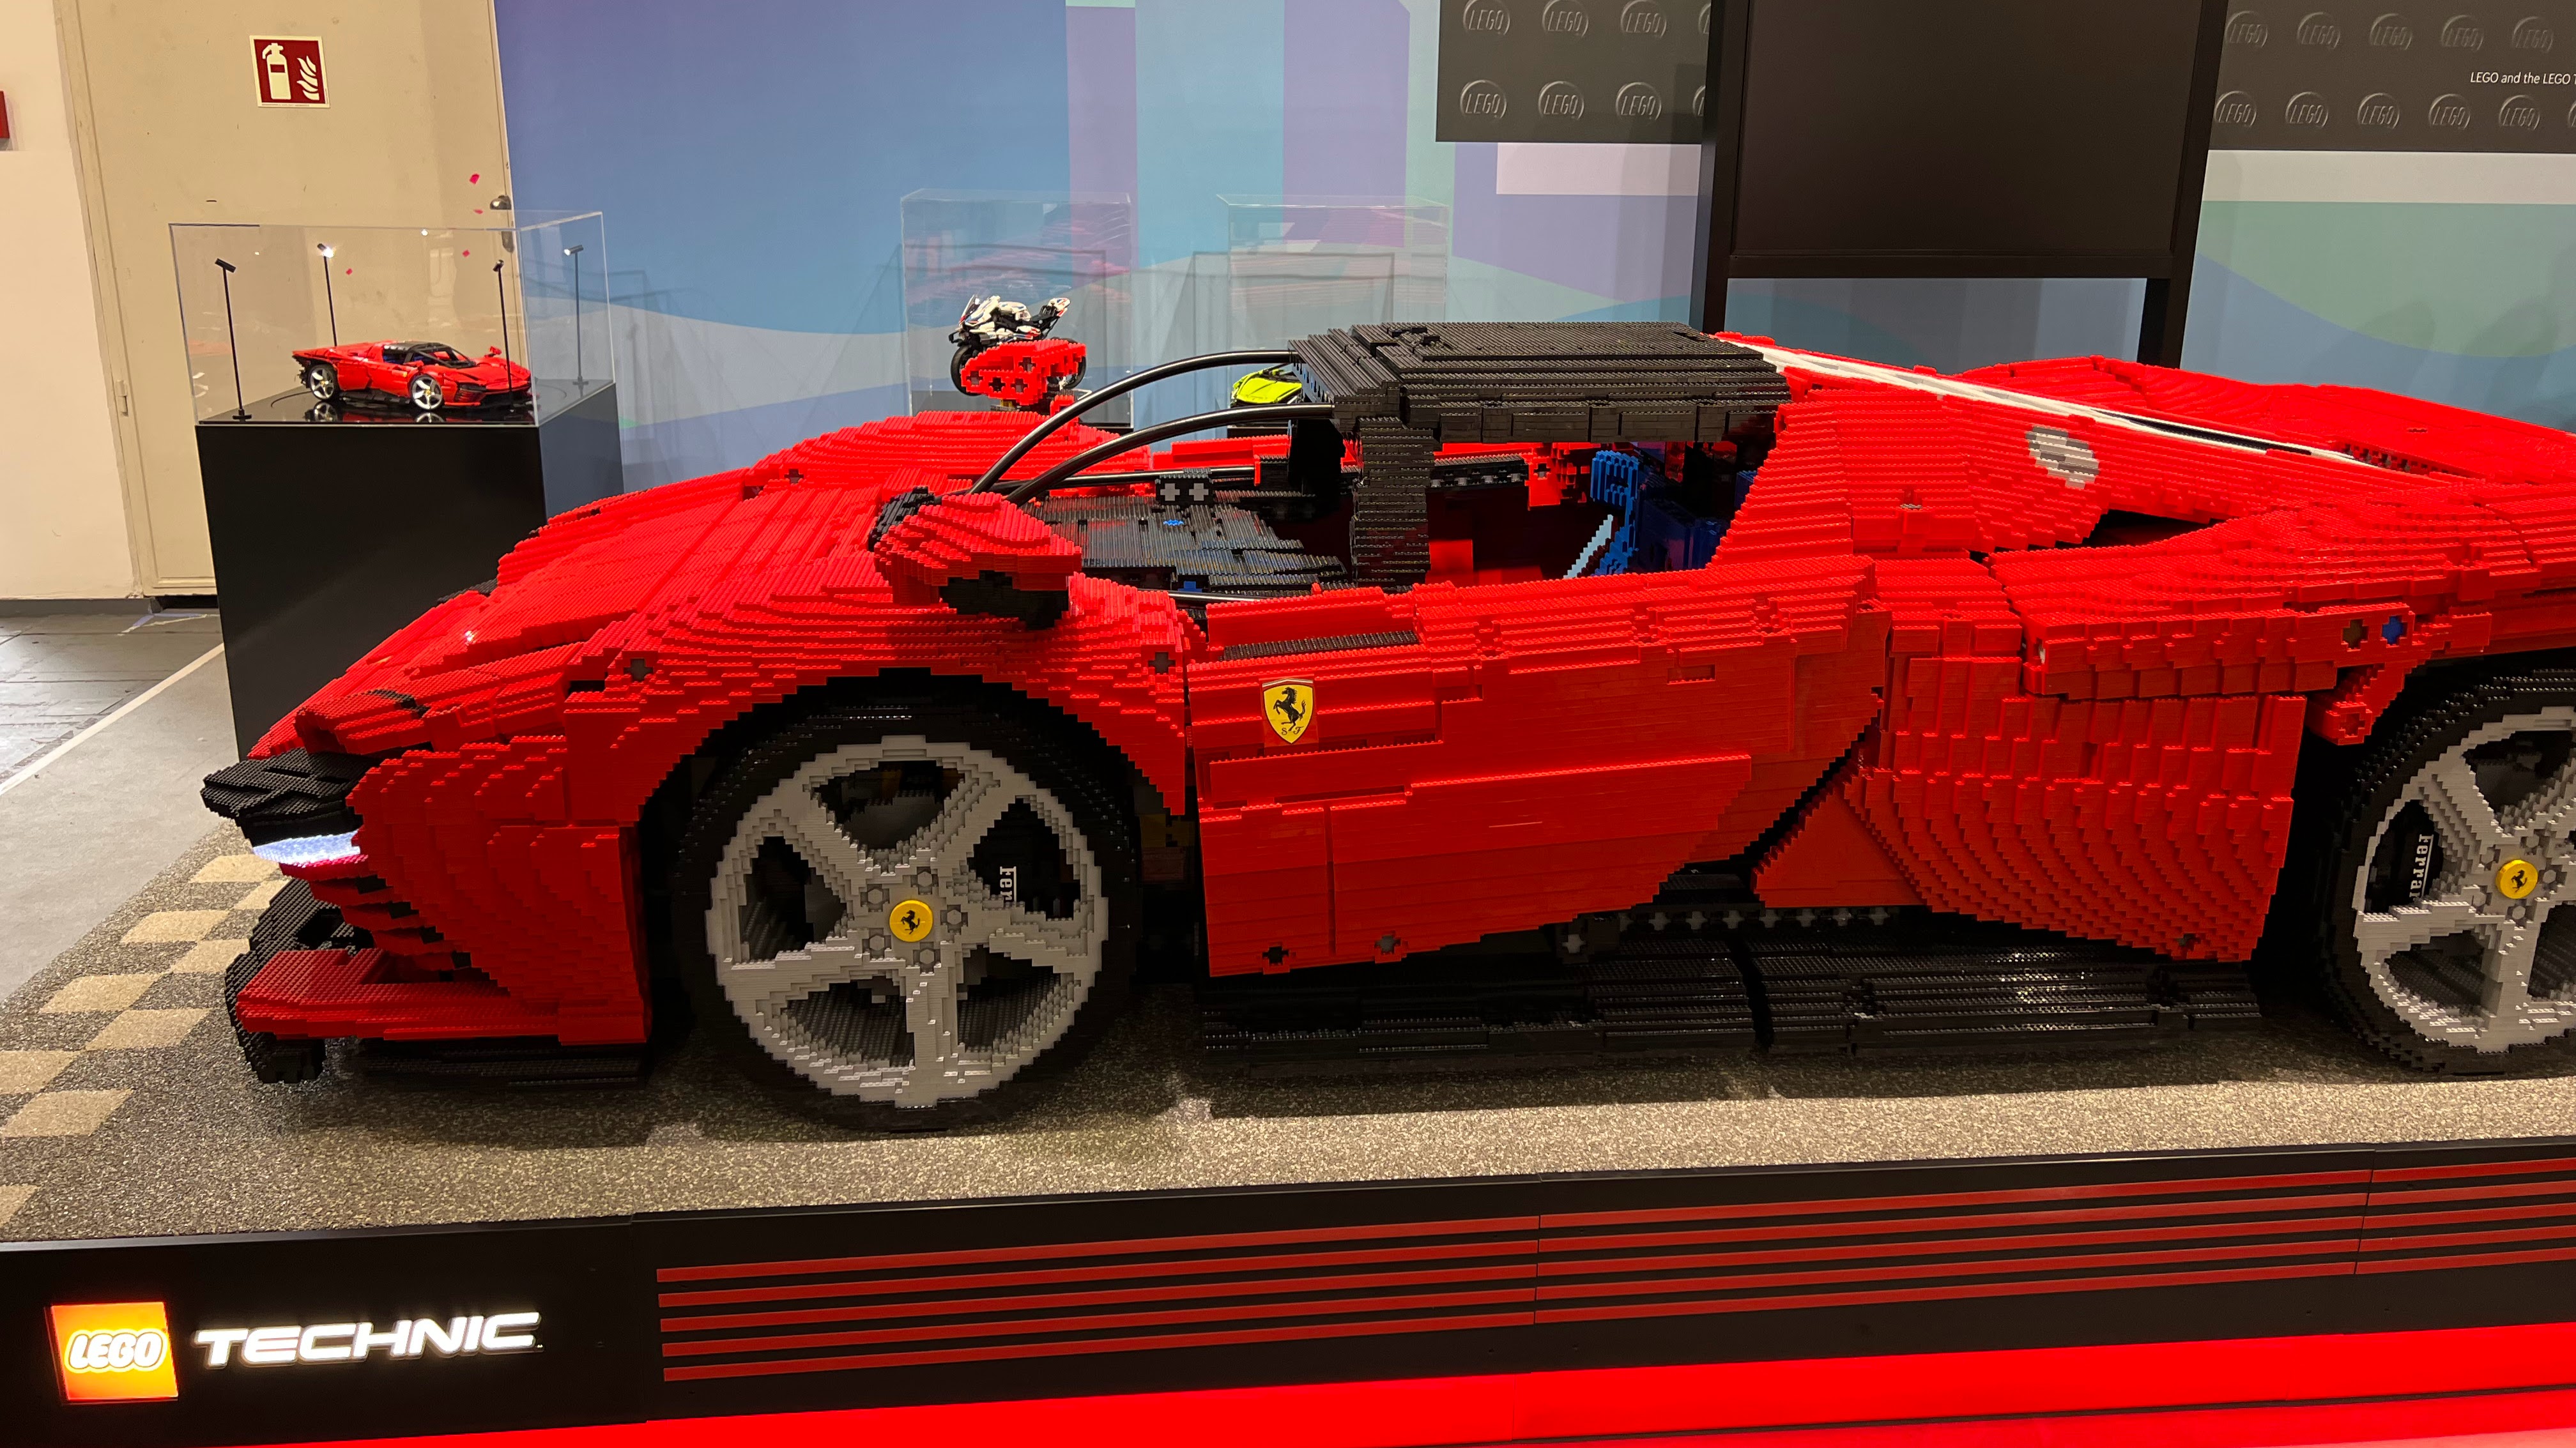 a Lego Technic model of a Ferrari SF90 Stradale